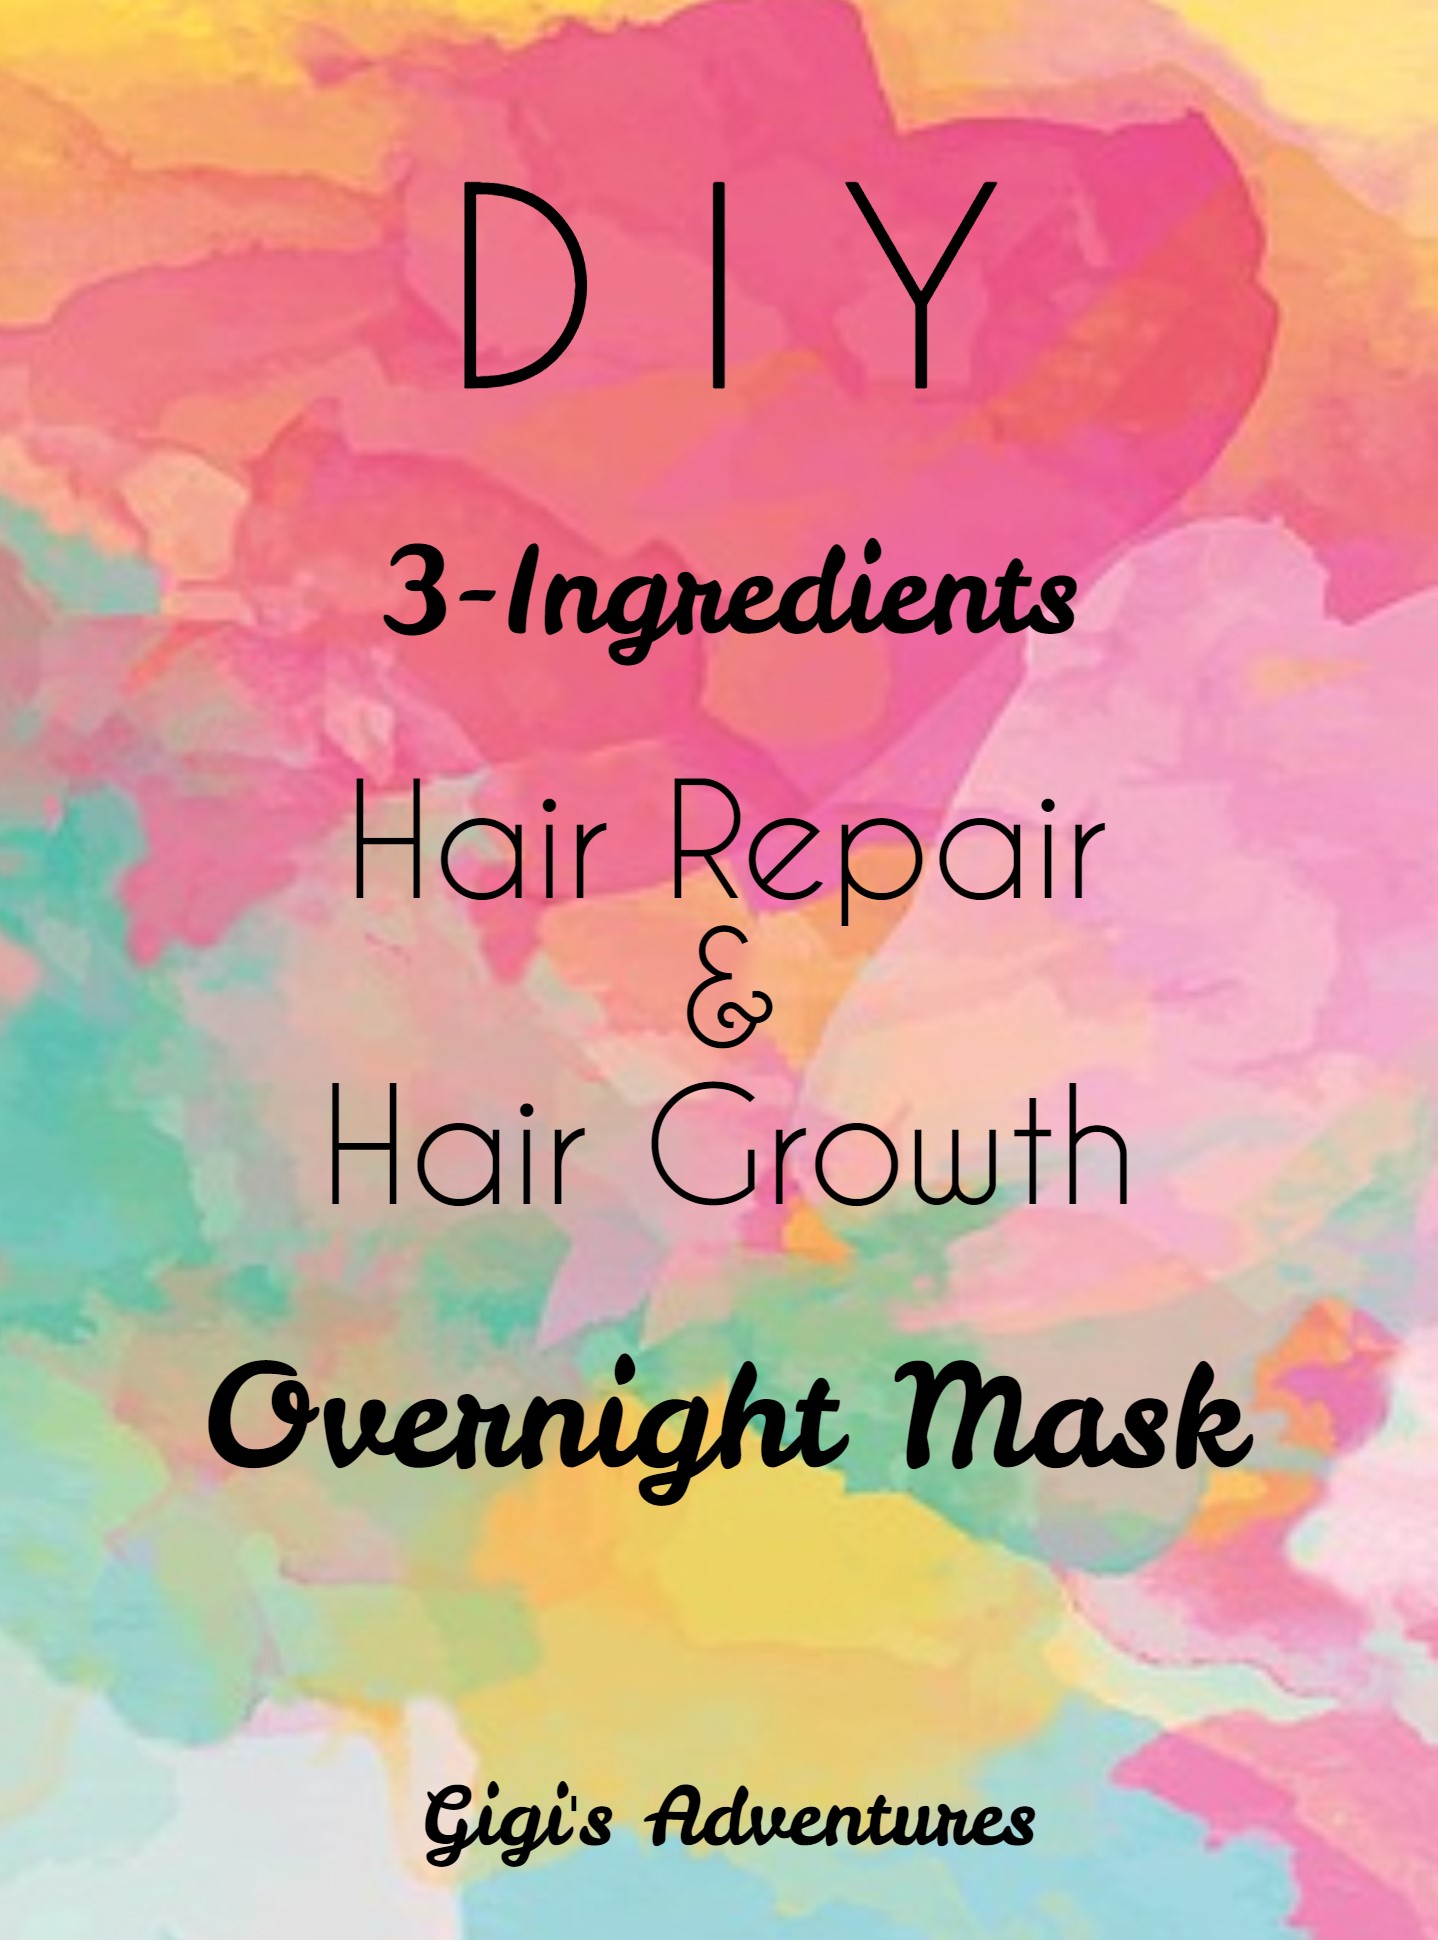 DIY 3-Ingredients Vegan Hair Repair & Growth Mask/Overnight Treatment